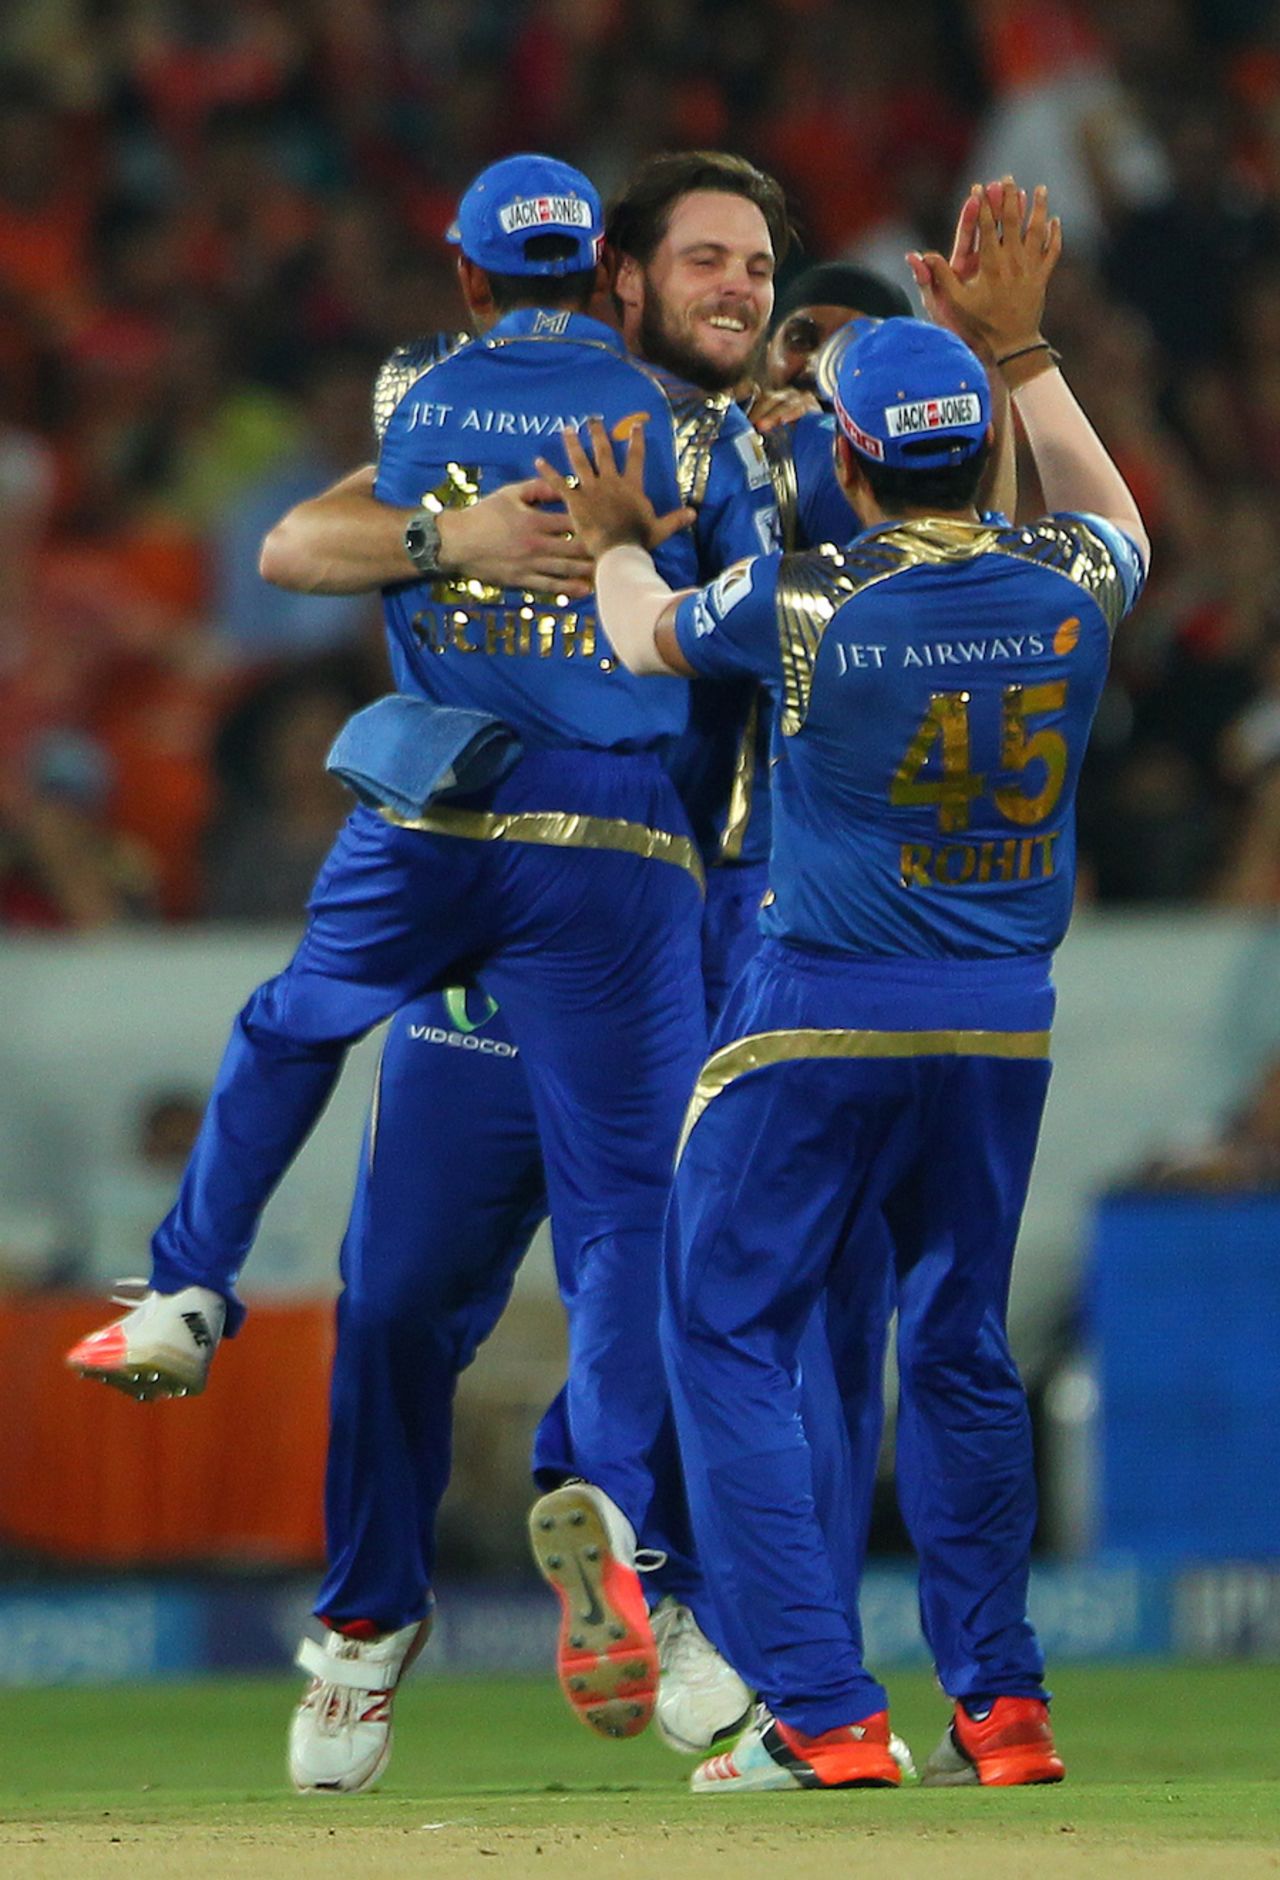 Mitchell McClenaghan celebrates after dismissing David Warner, Sunrisers Hyderabad v Mumbai Indians, IPL 2015, Hyderabad, May 17, 2015